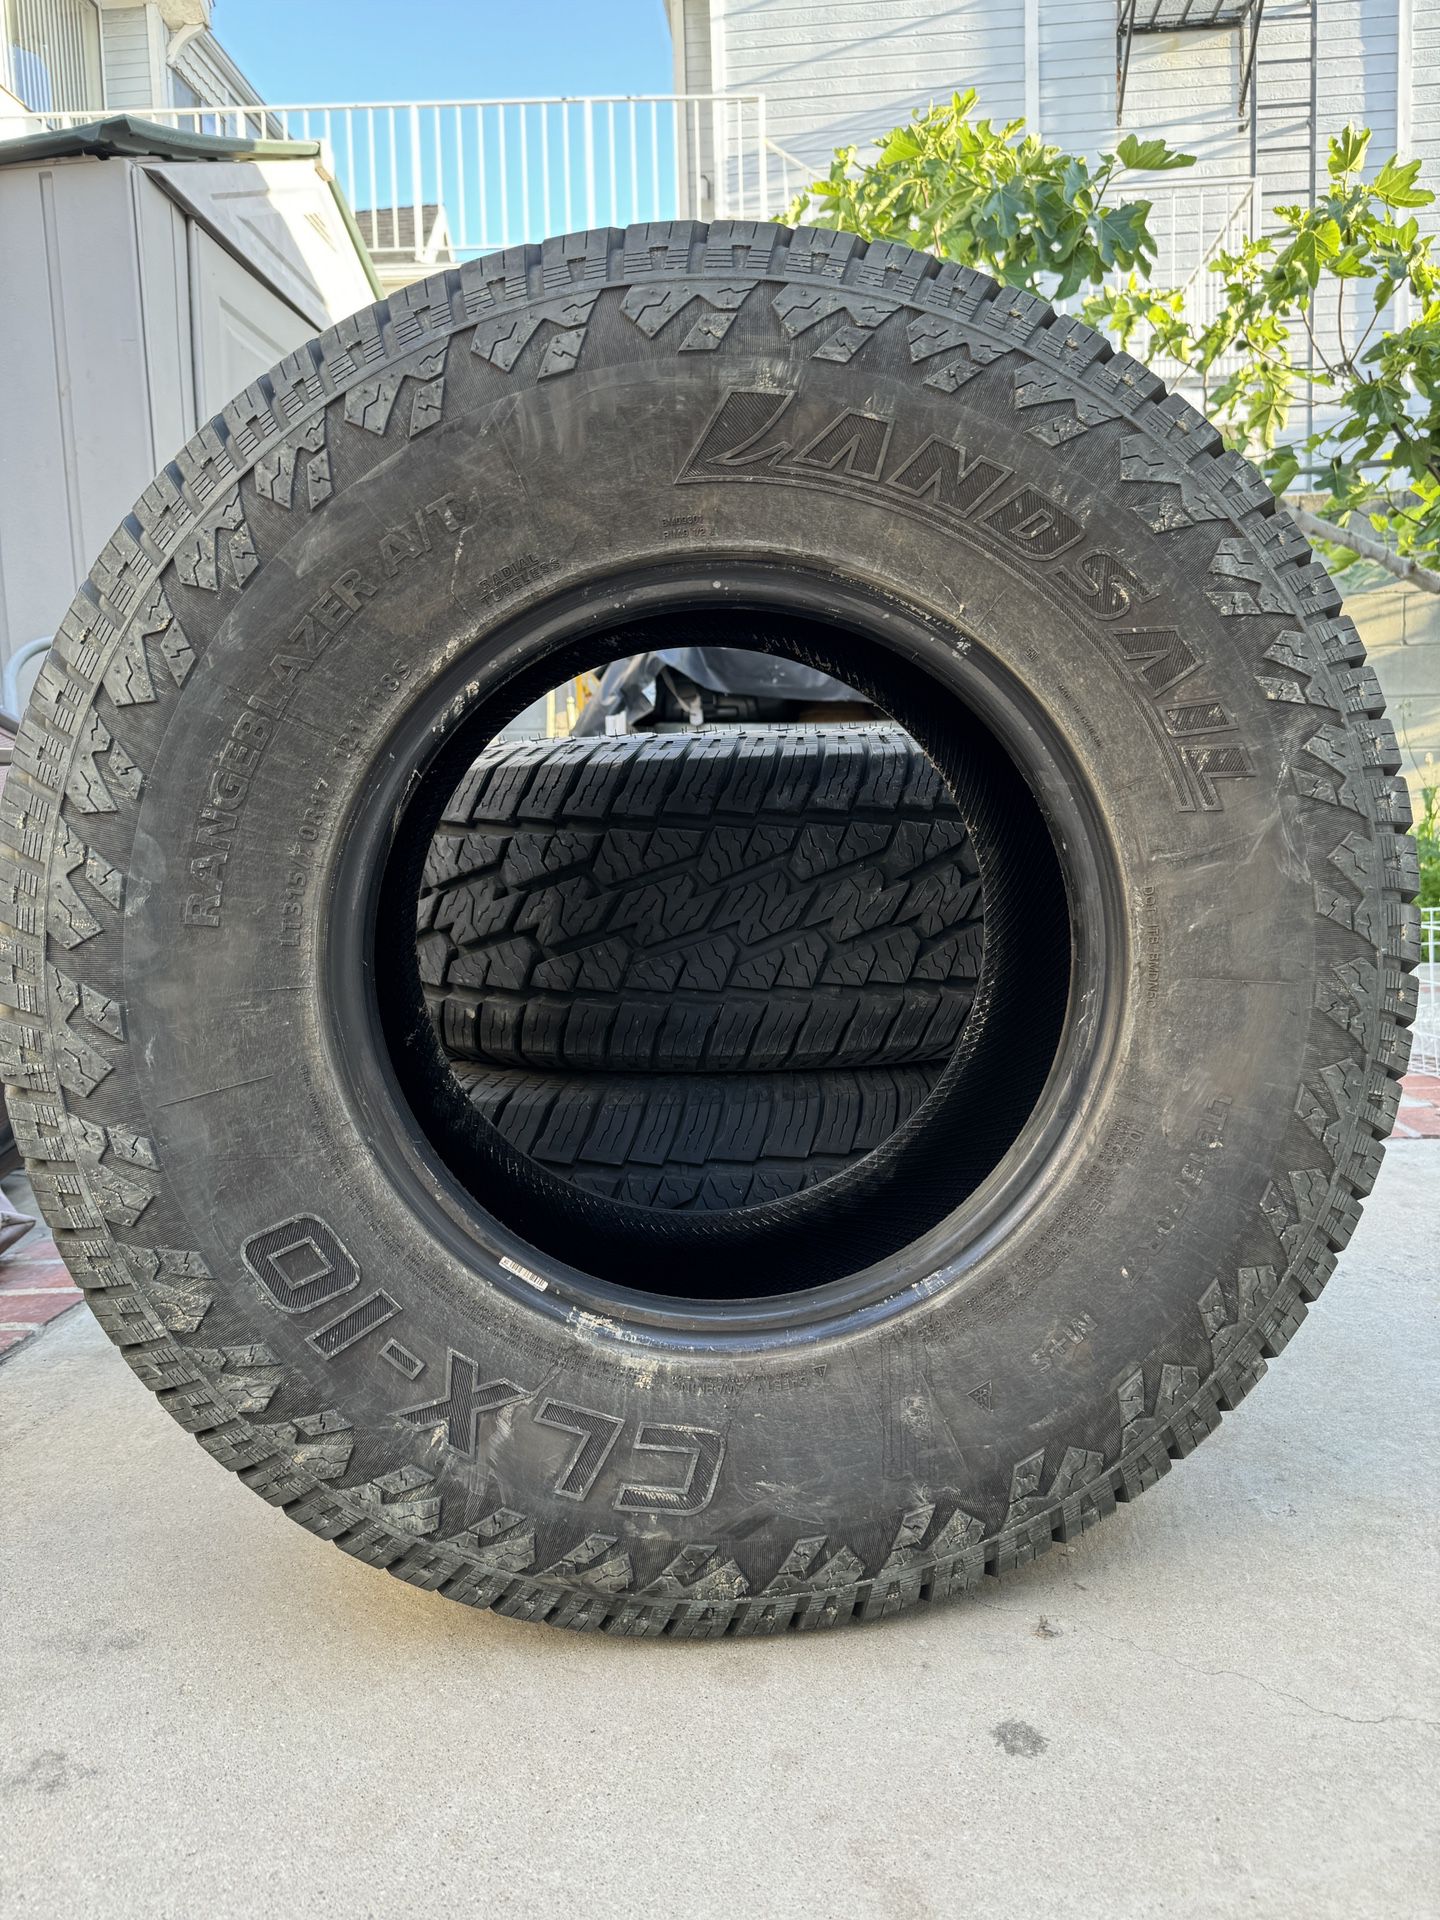 35’ Landsail CLX-10 Tires